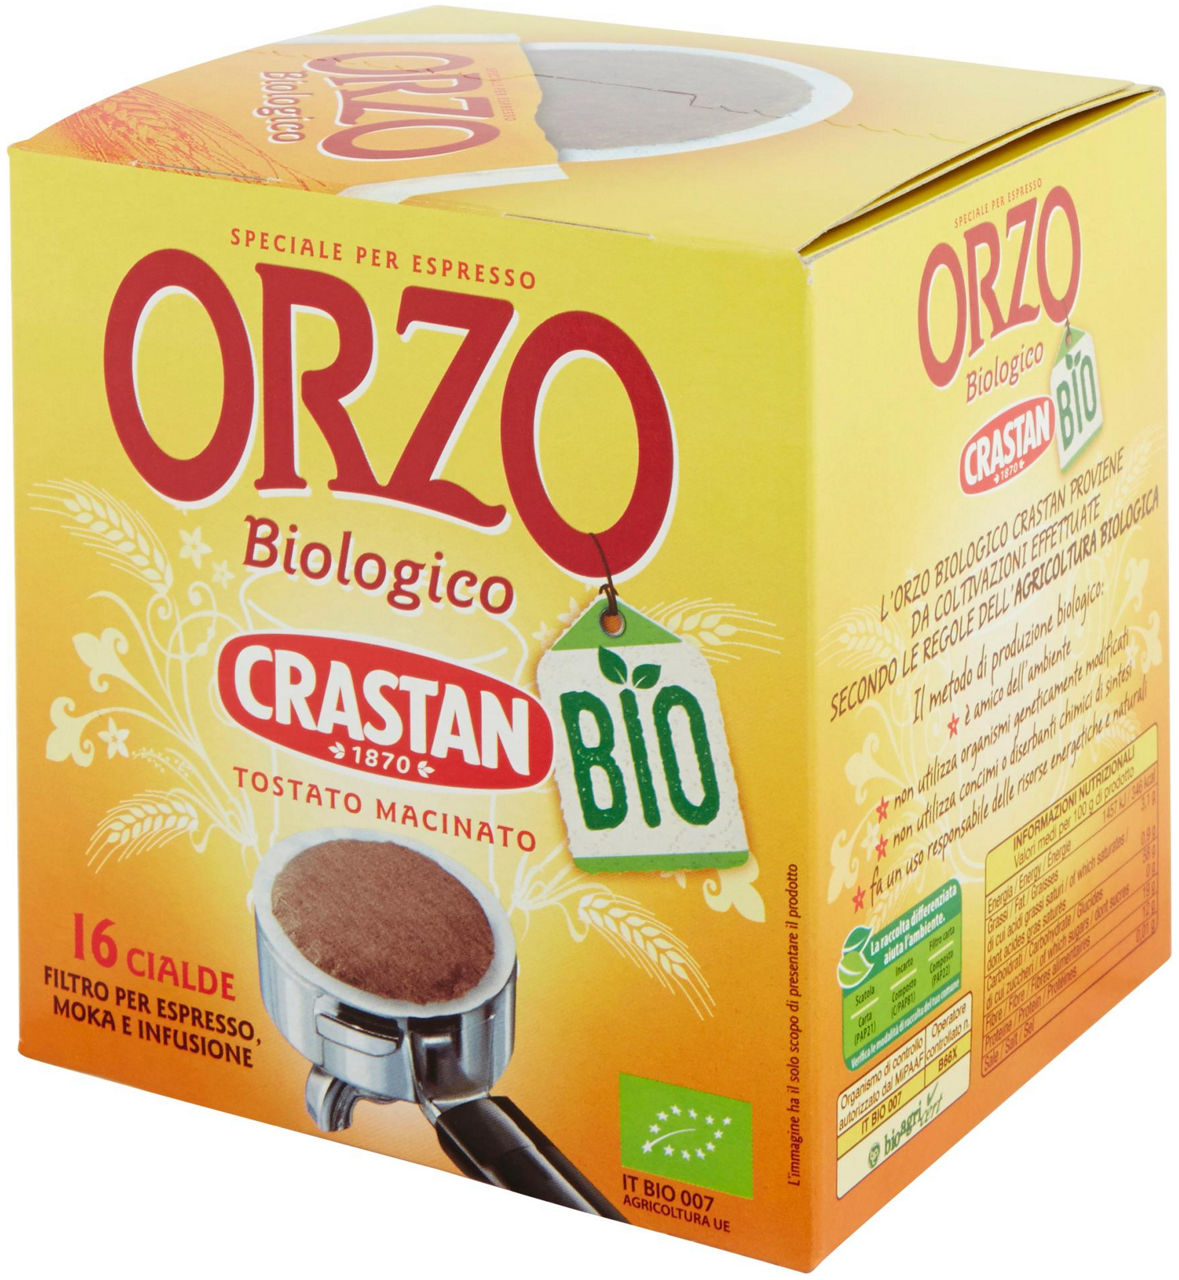 ORZO CRASTAN BIOLOGICO IN CIALDE SCATOLA GR.96 - 6